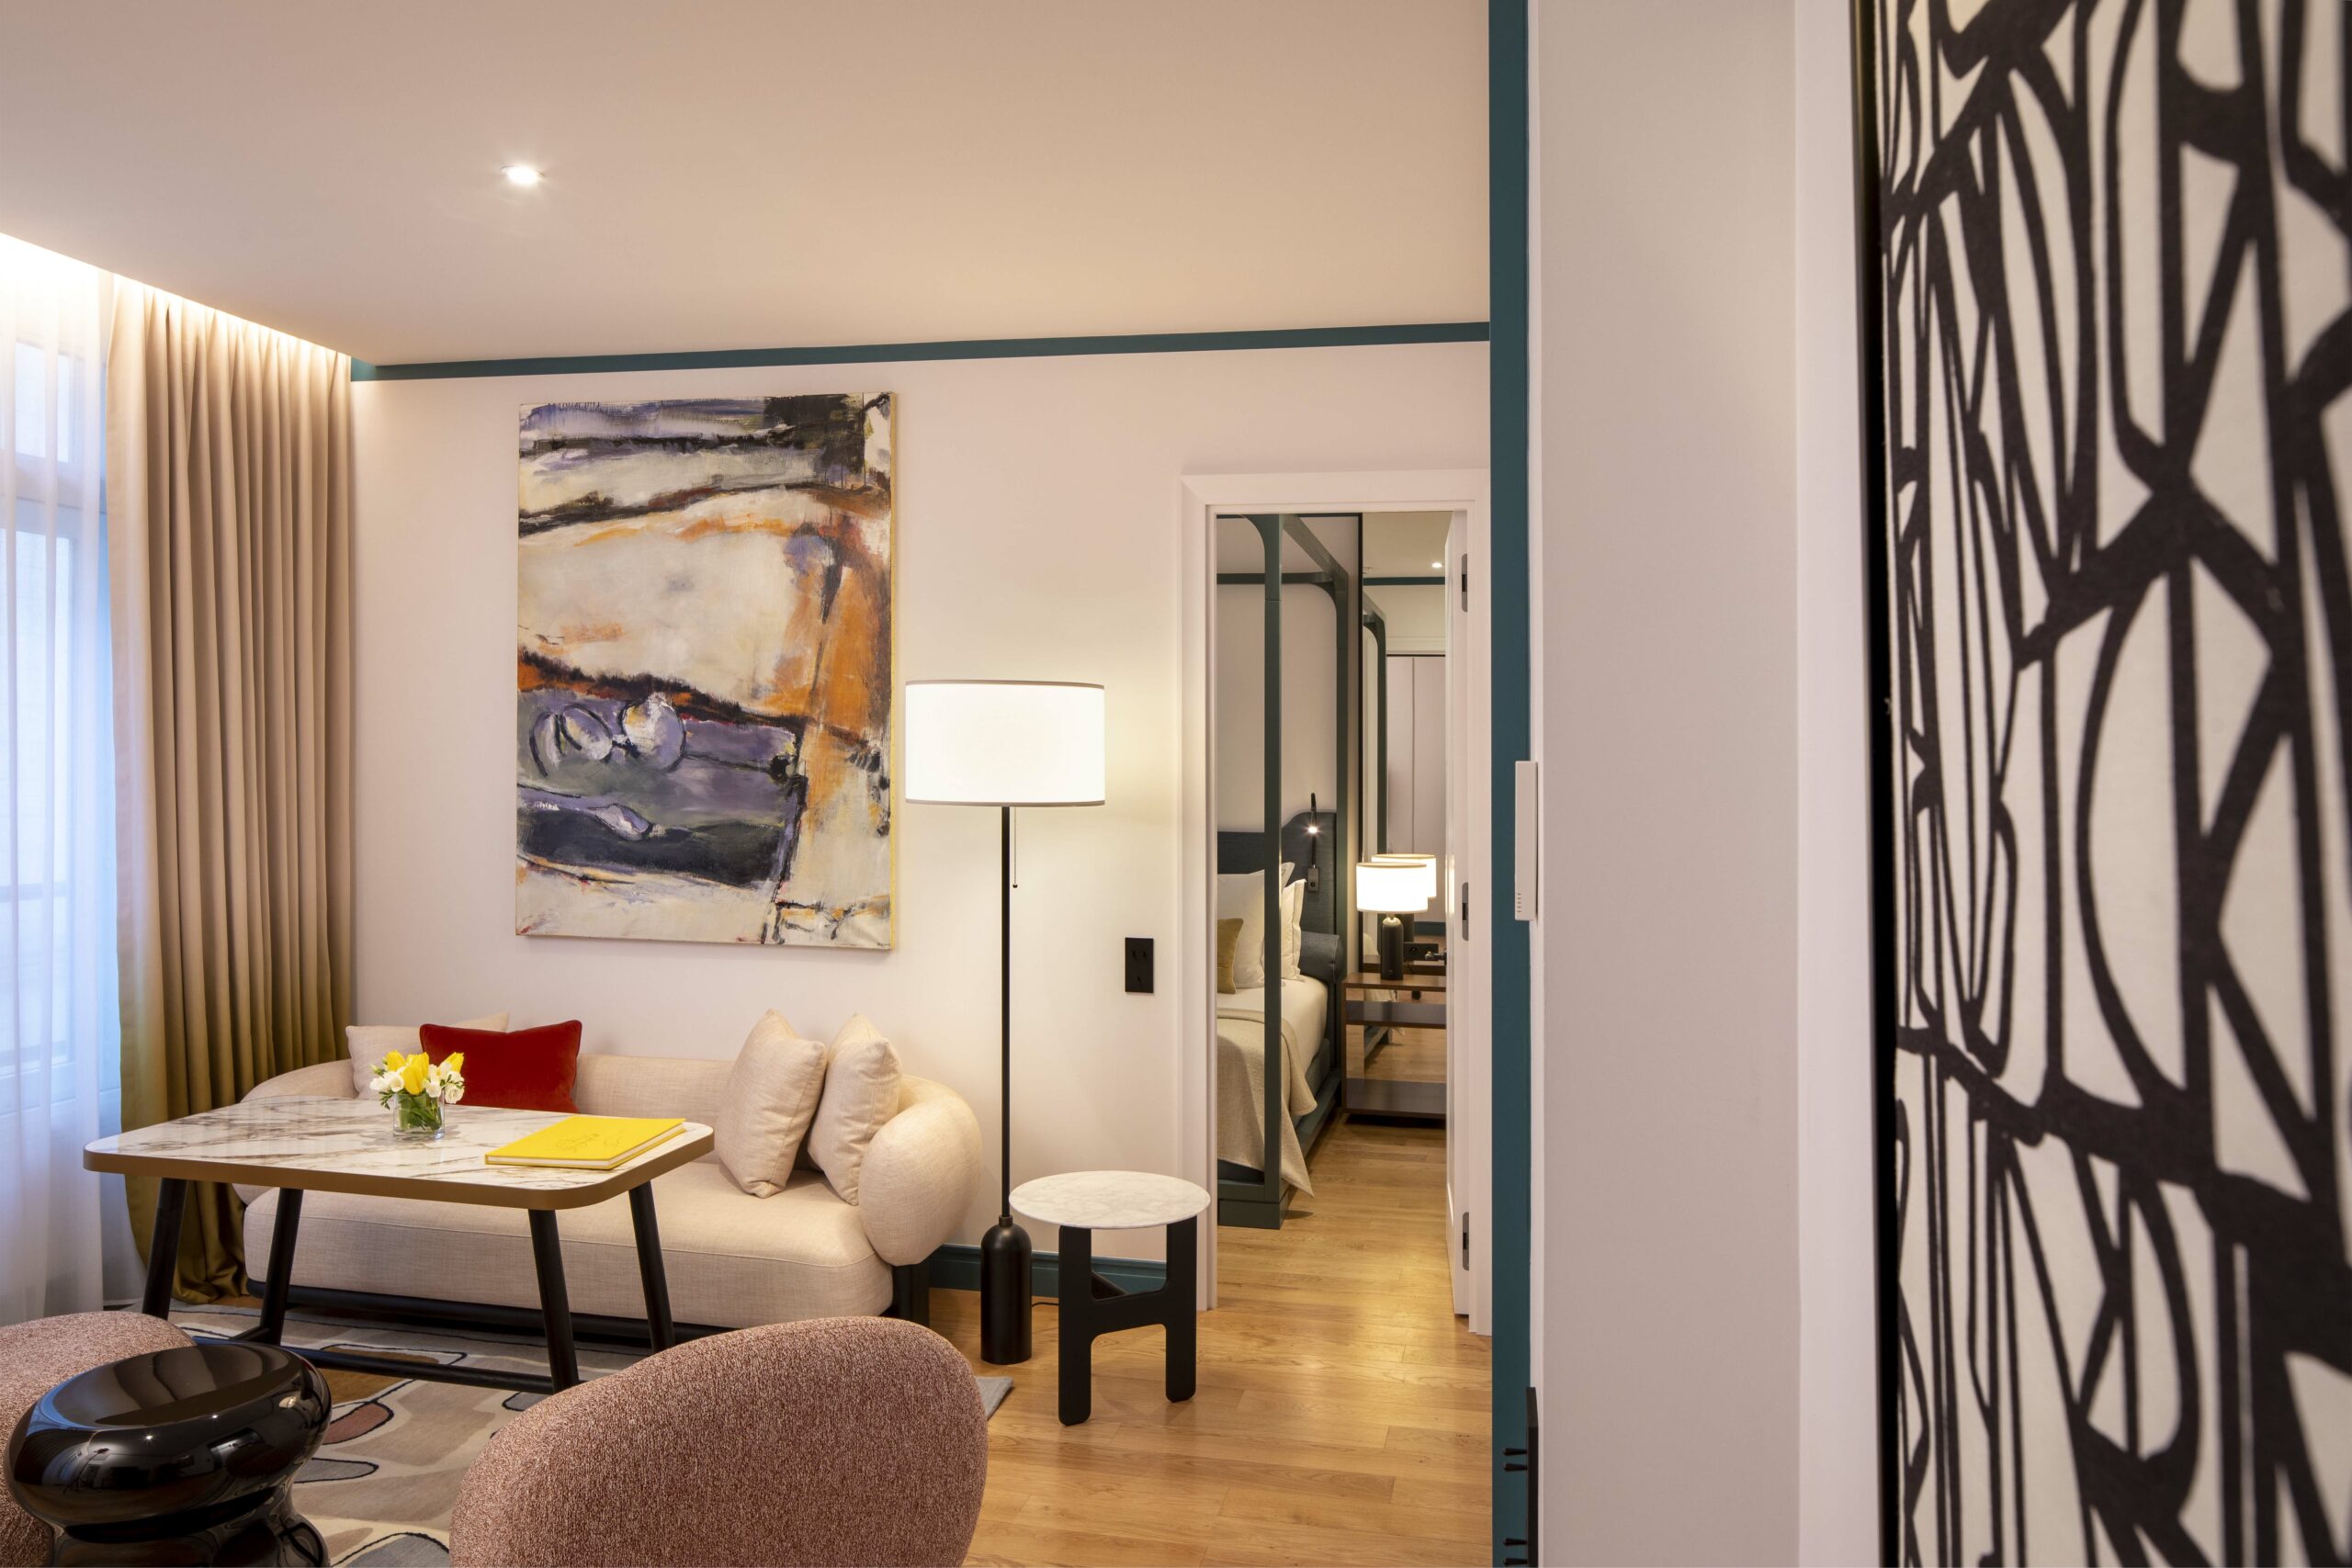 Hotel Bel Ami – apartments – image 8